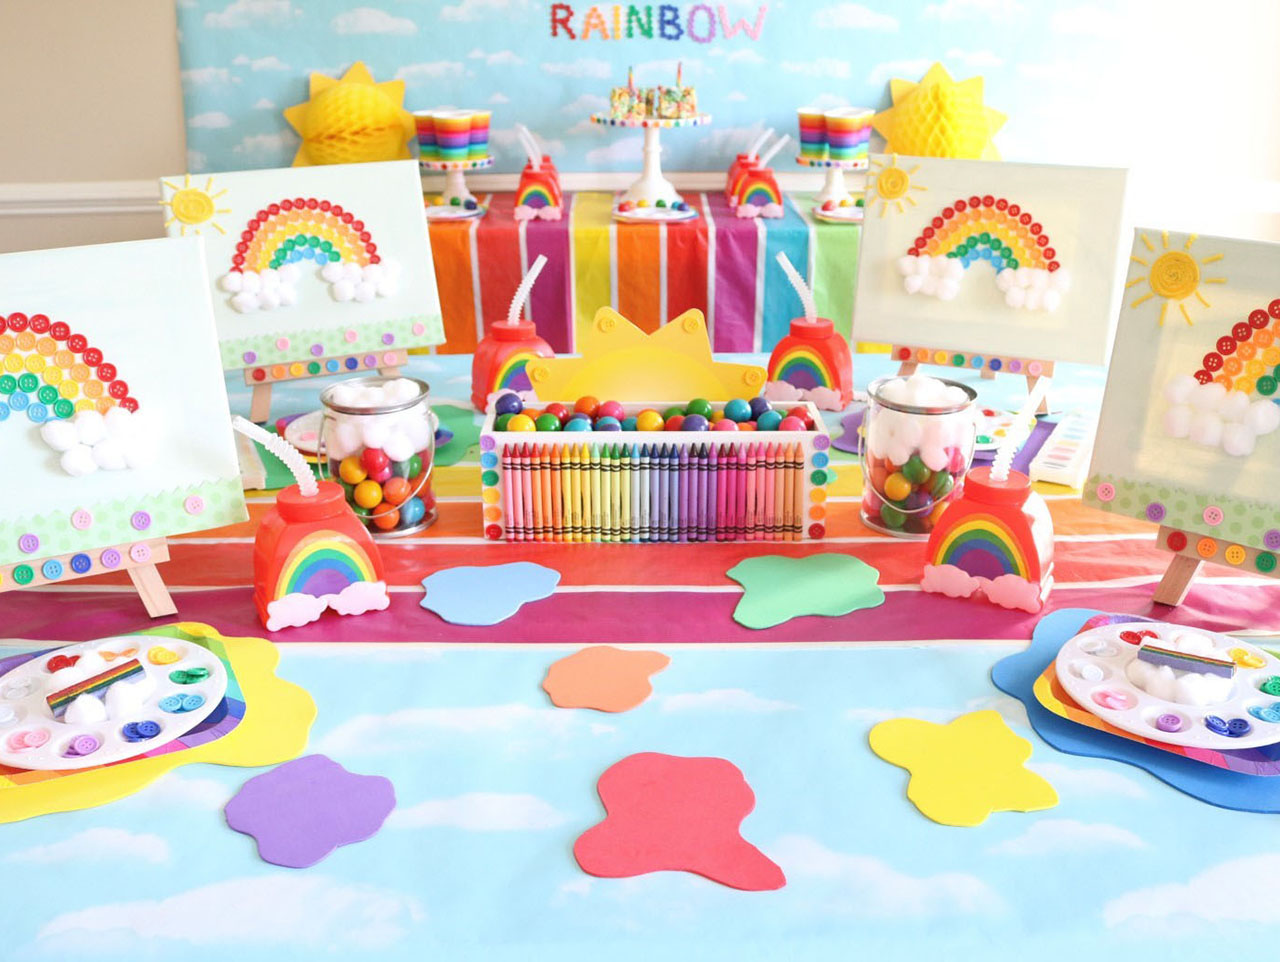 Rainbow Party Centerpiece - Party Decor - 1 Piece